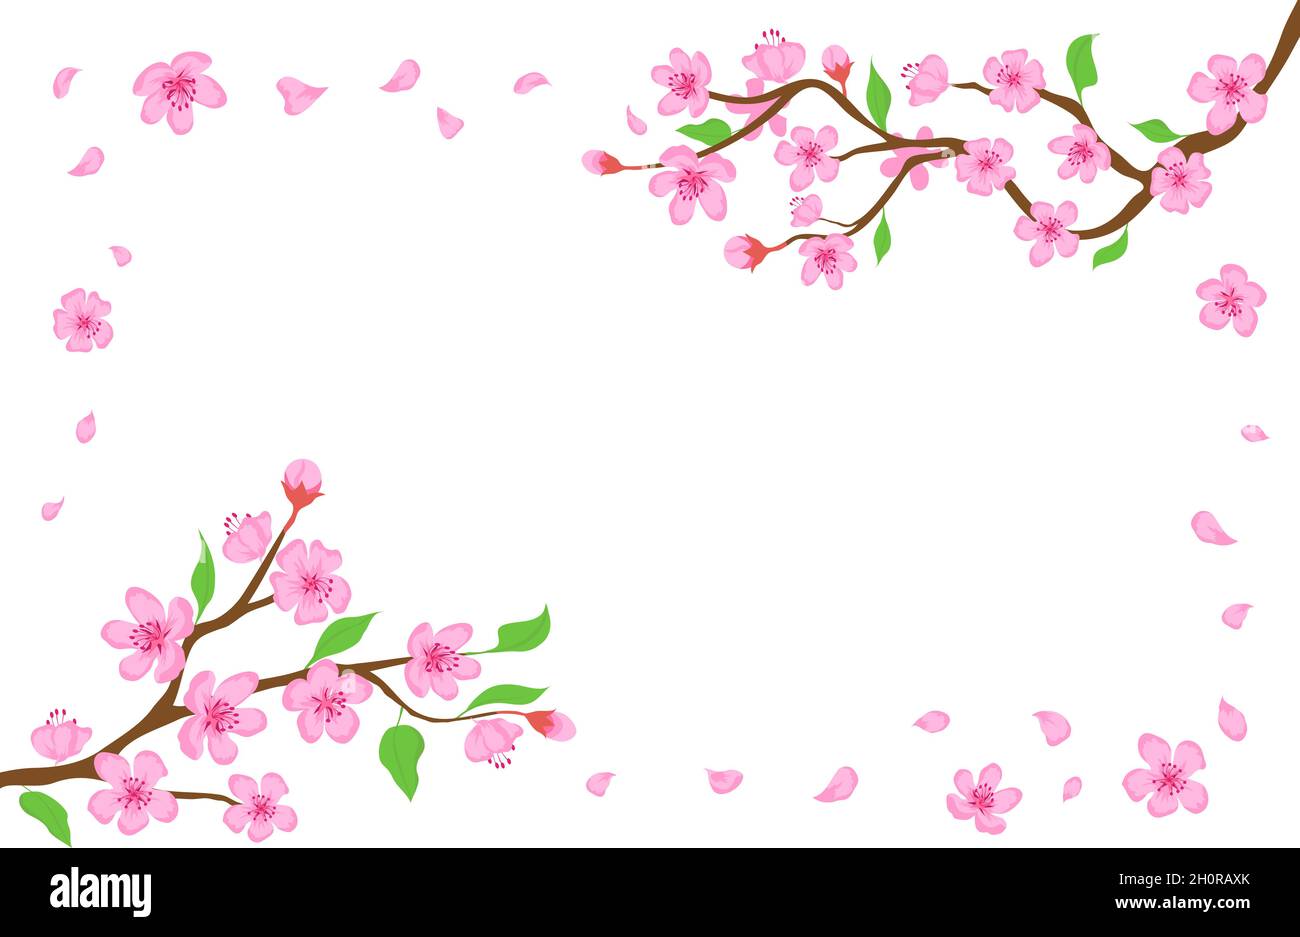 Dibujos animados de flores de cerezo japonés y pétalos que caen de fondo.  Sakura ramas con flores rosa bandera flor flor flor flor árbol marco  vectorial Imagen Vector de stock - Alamy